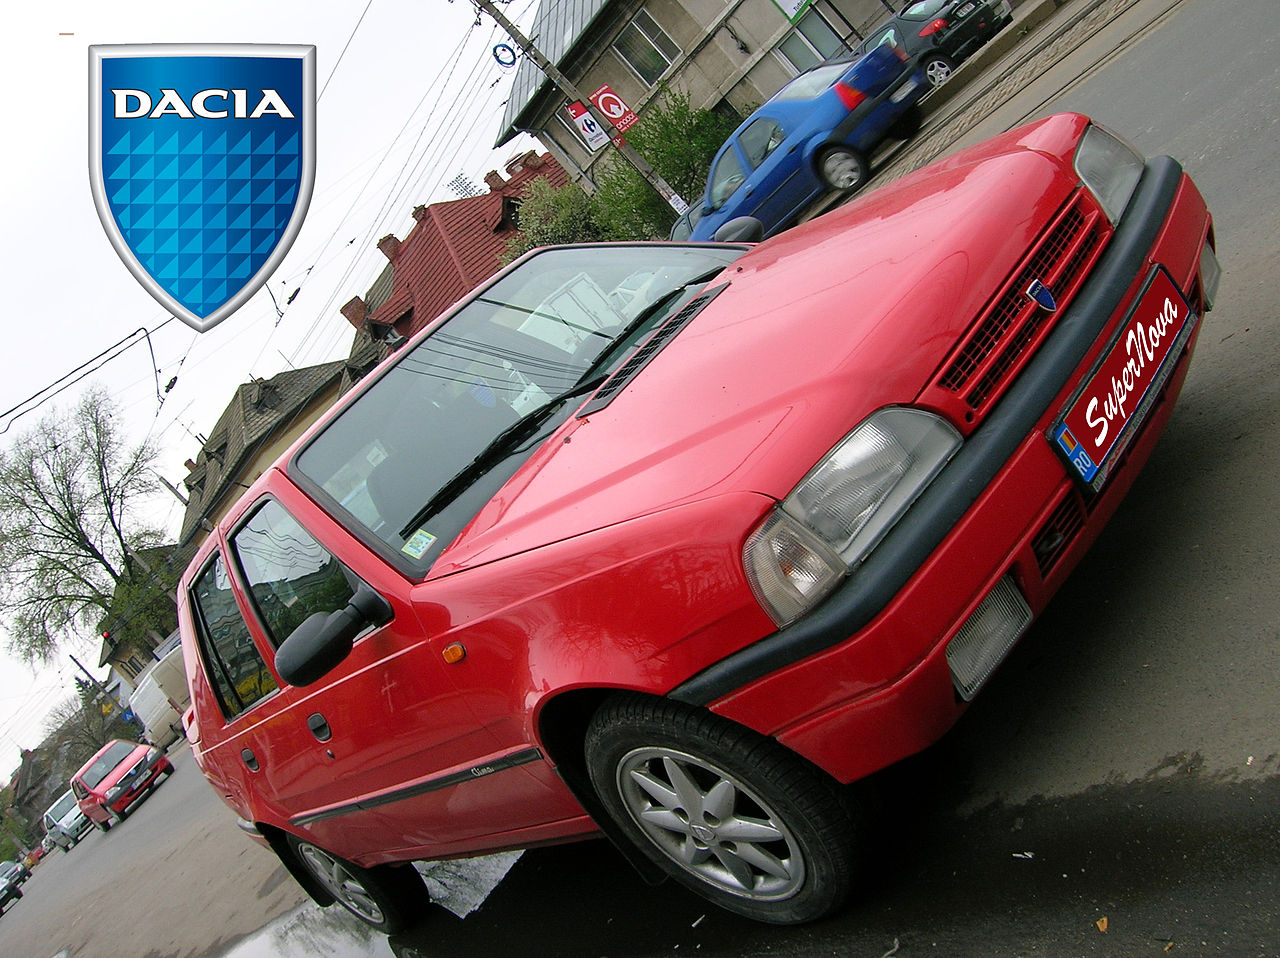 File:Dacia SuperNova.jpg - Wikimedia Commons